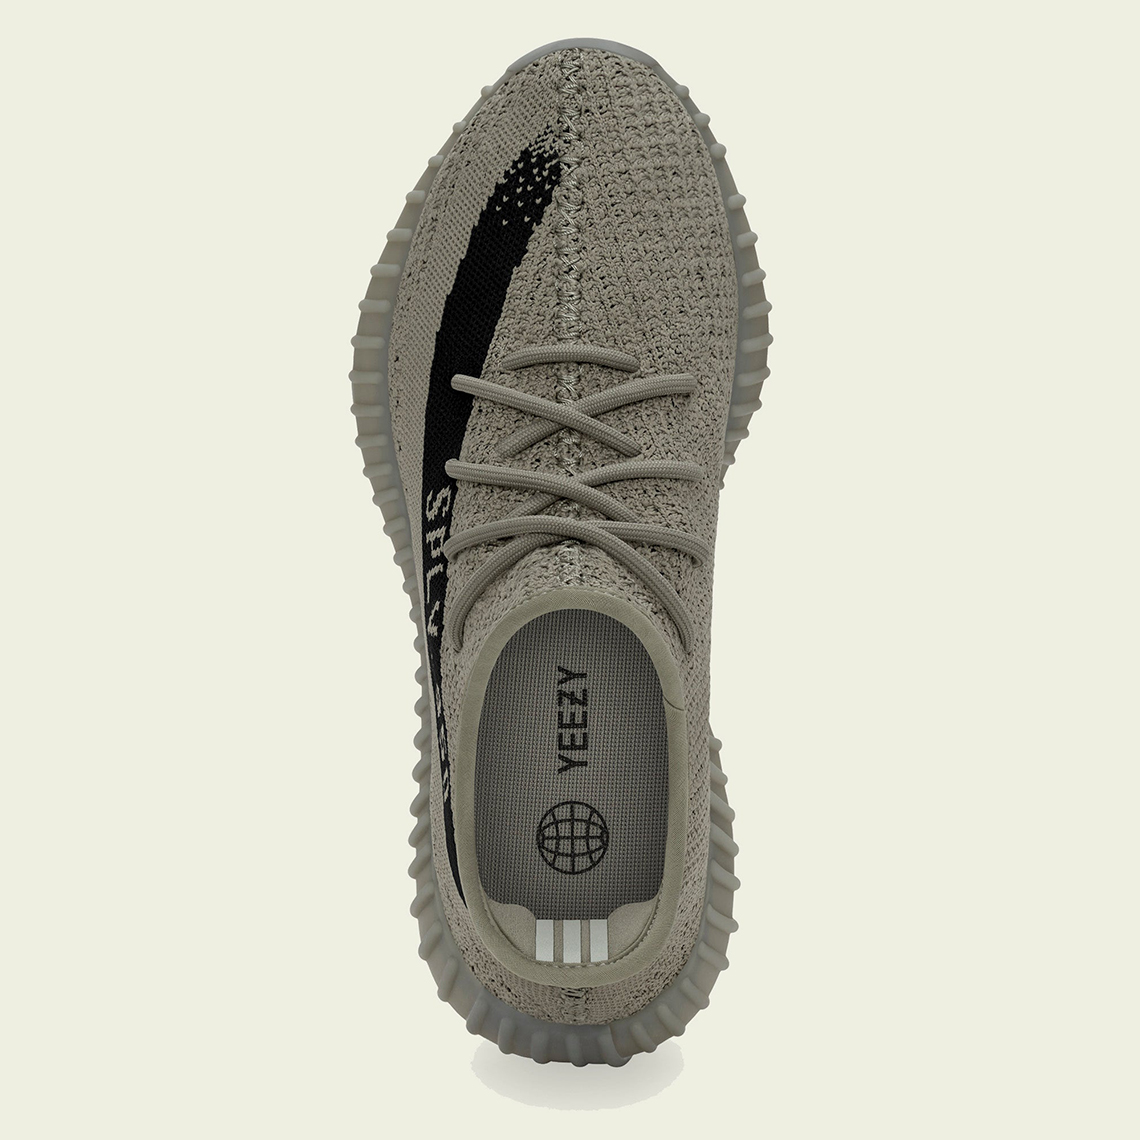 Adidas Yeezy Boost 350 V2 Granite Store List 3